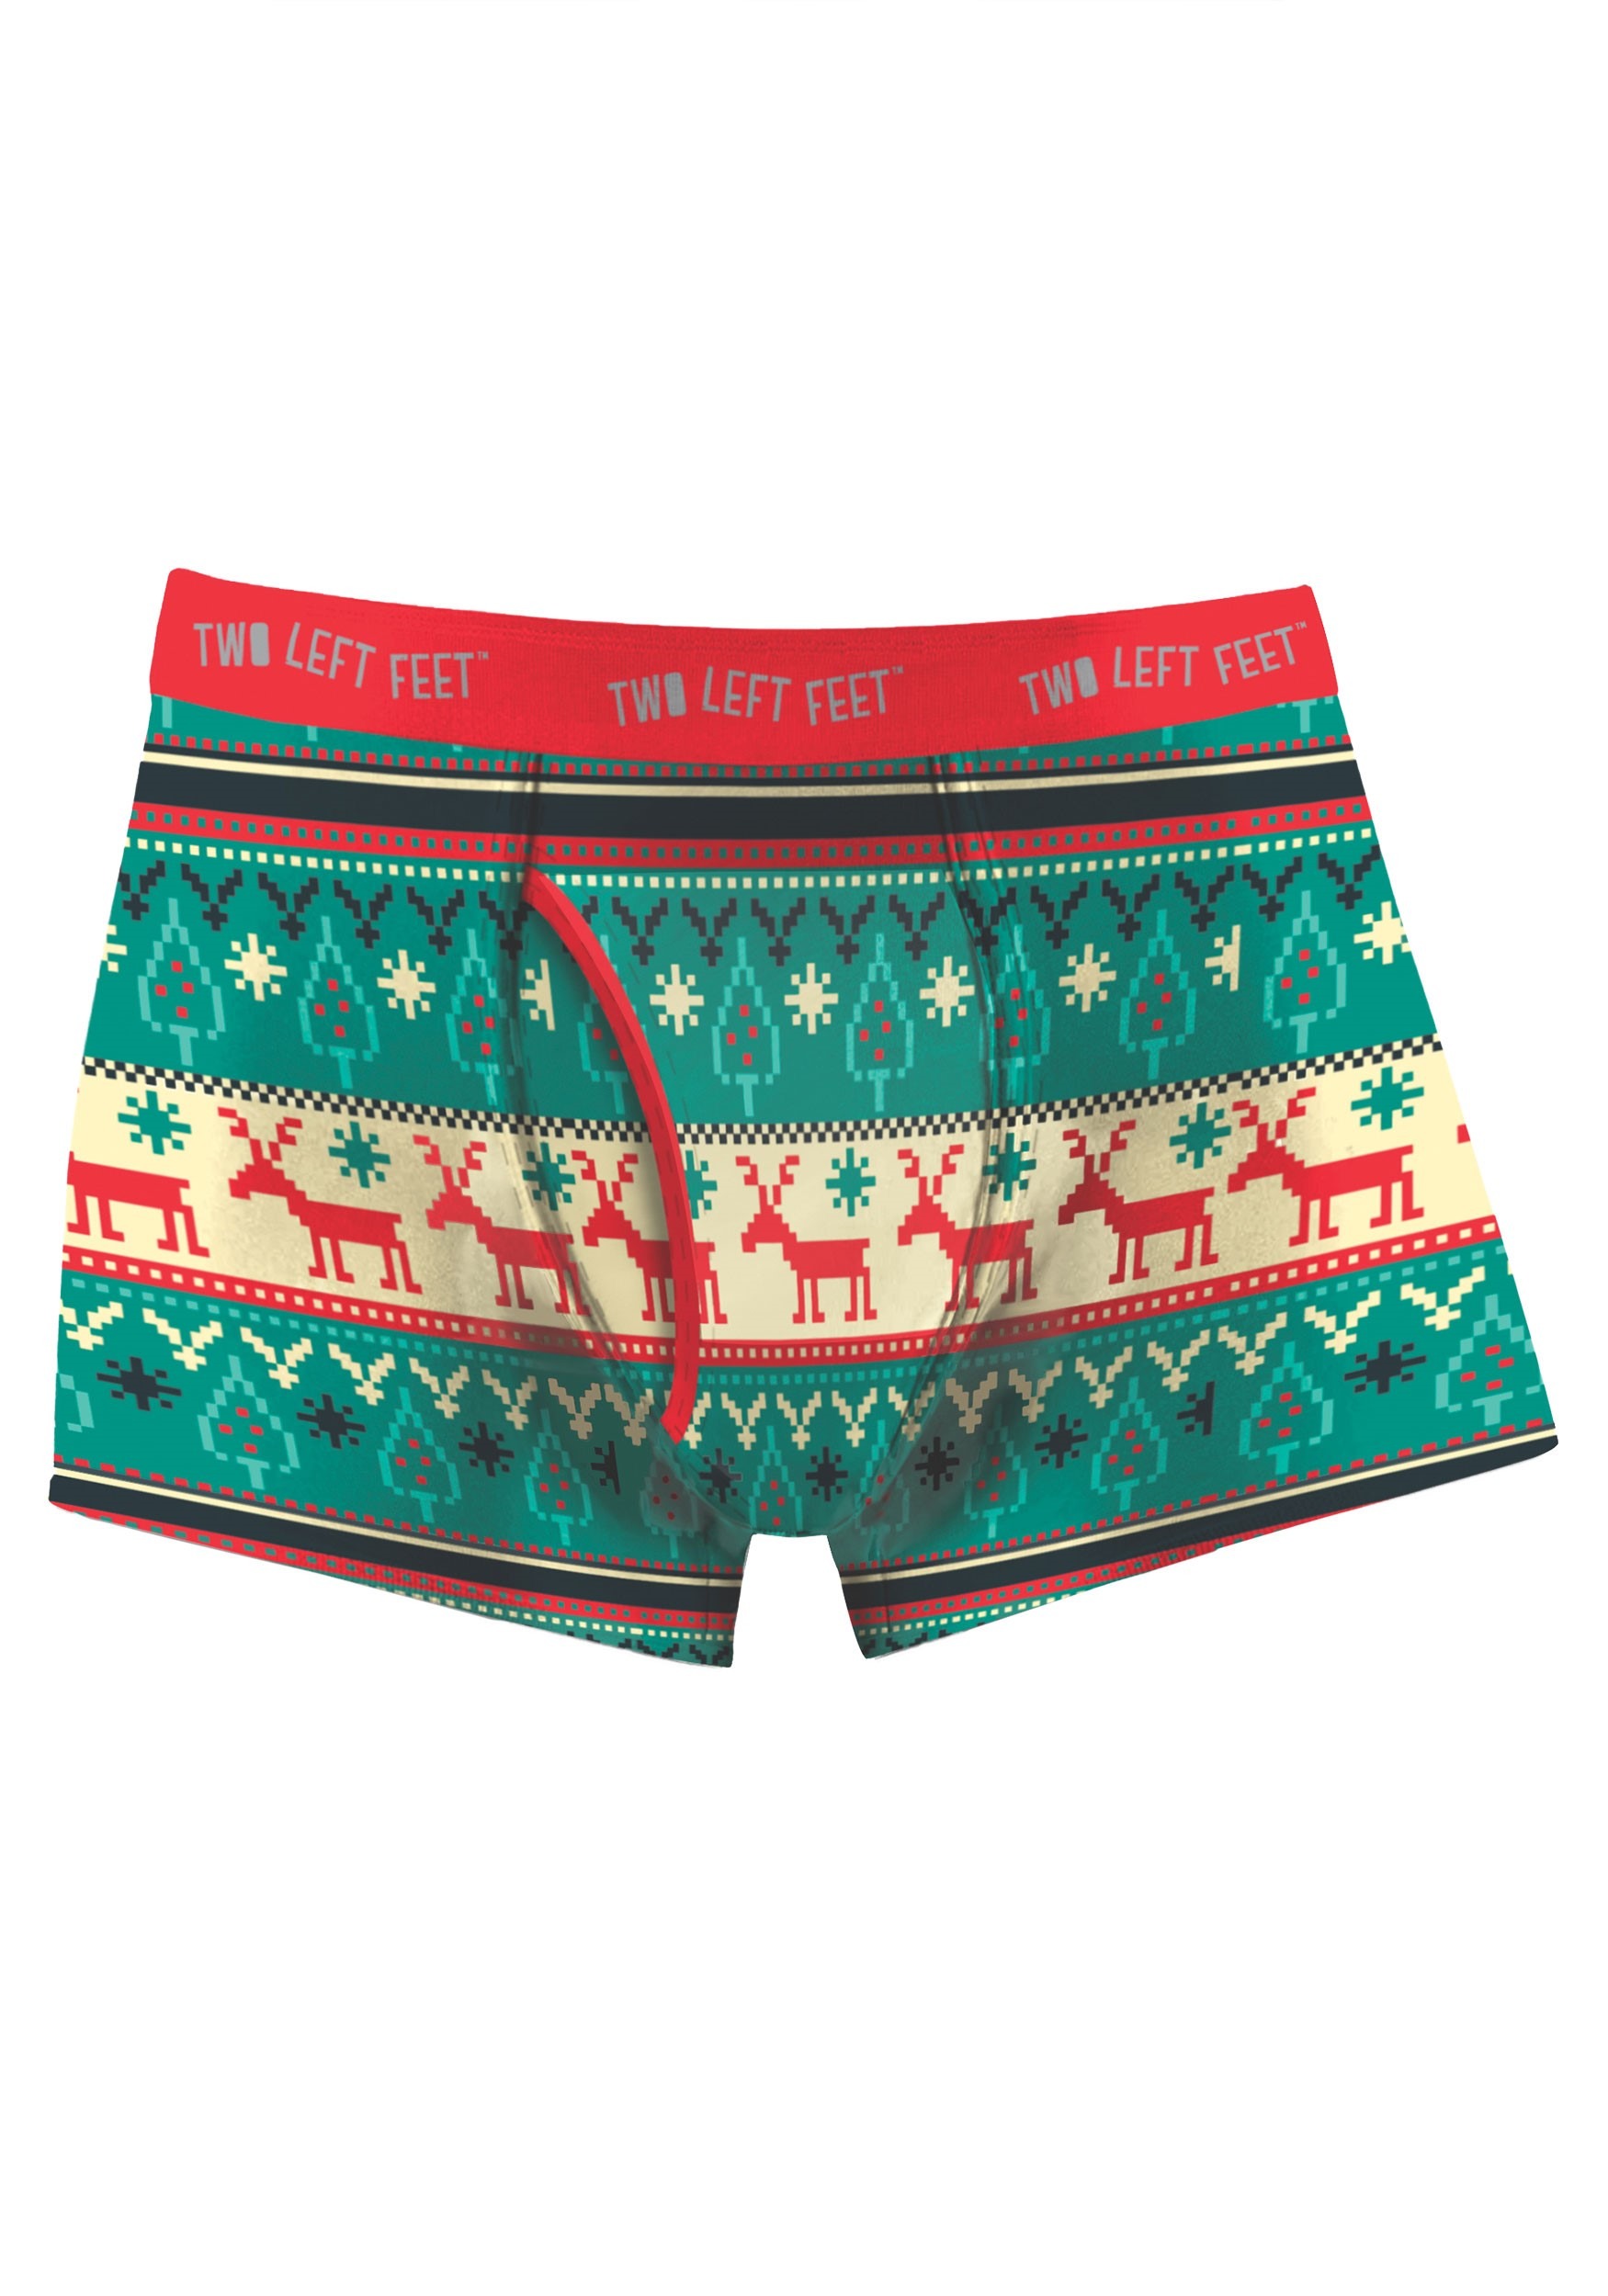 Christmas Men's Trunk Boxer Brief Underwear Two Left Feet 'Reindeer Xing'